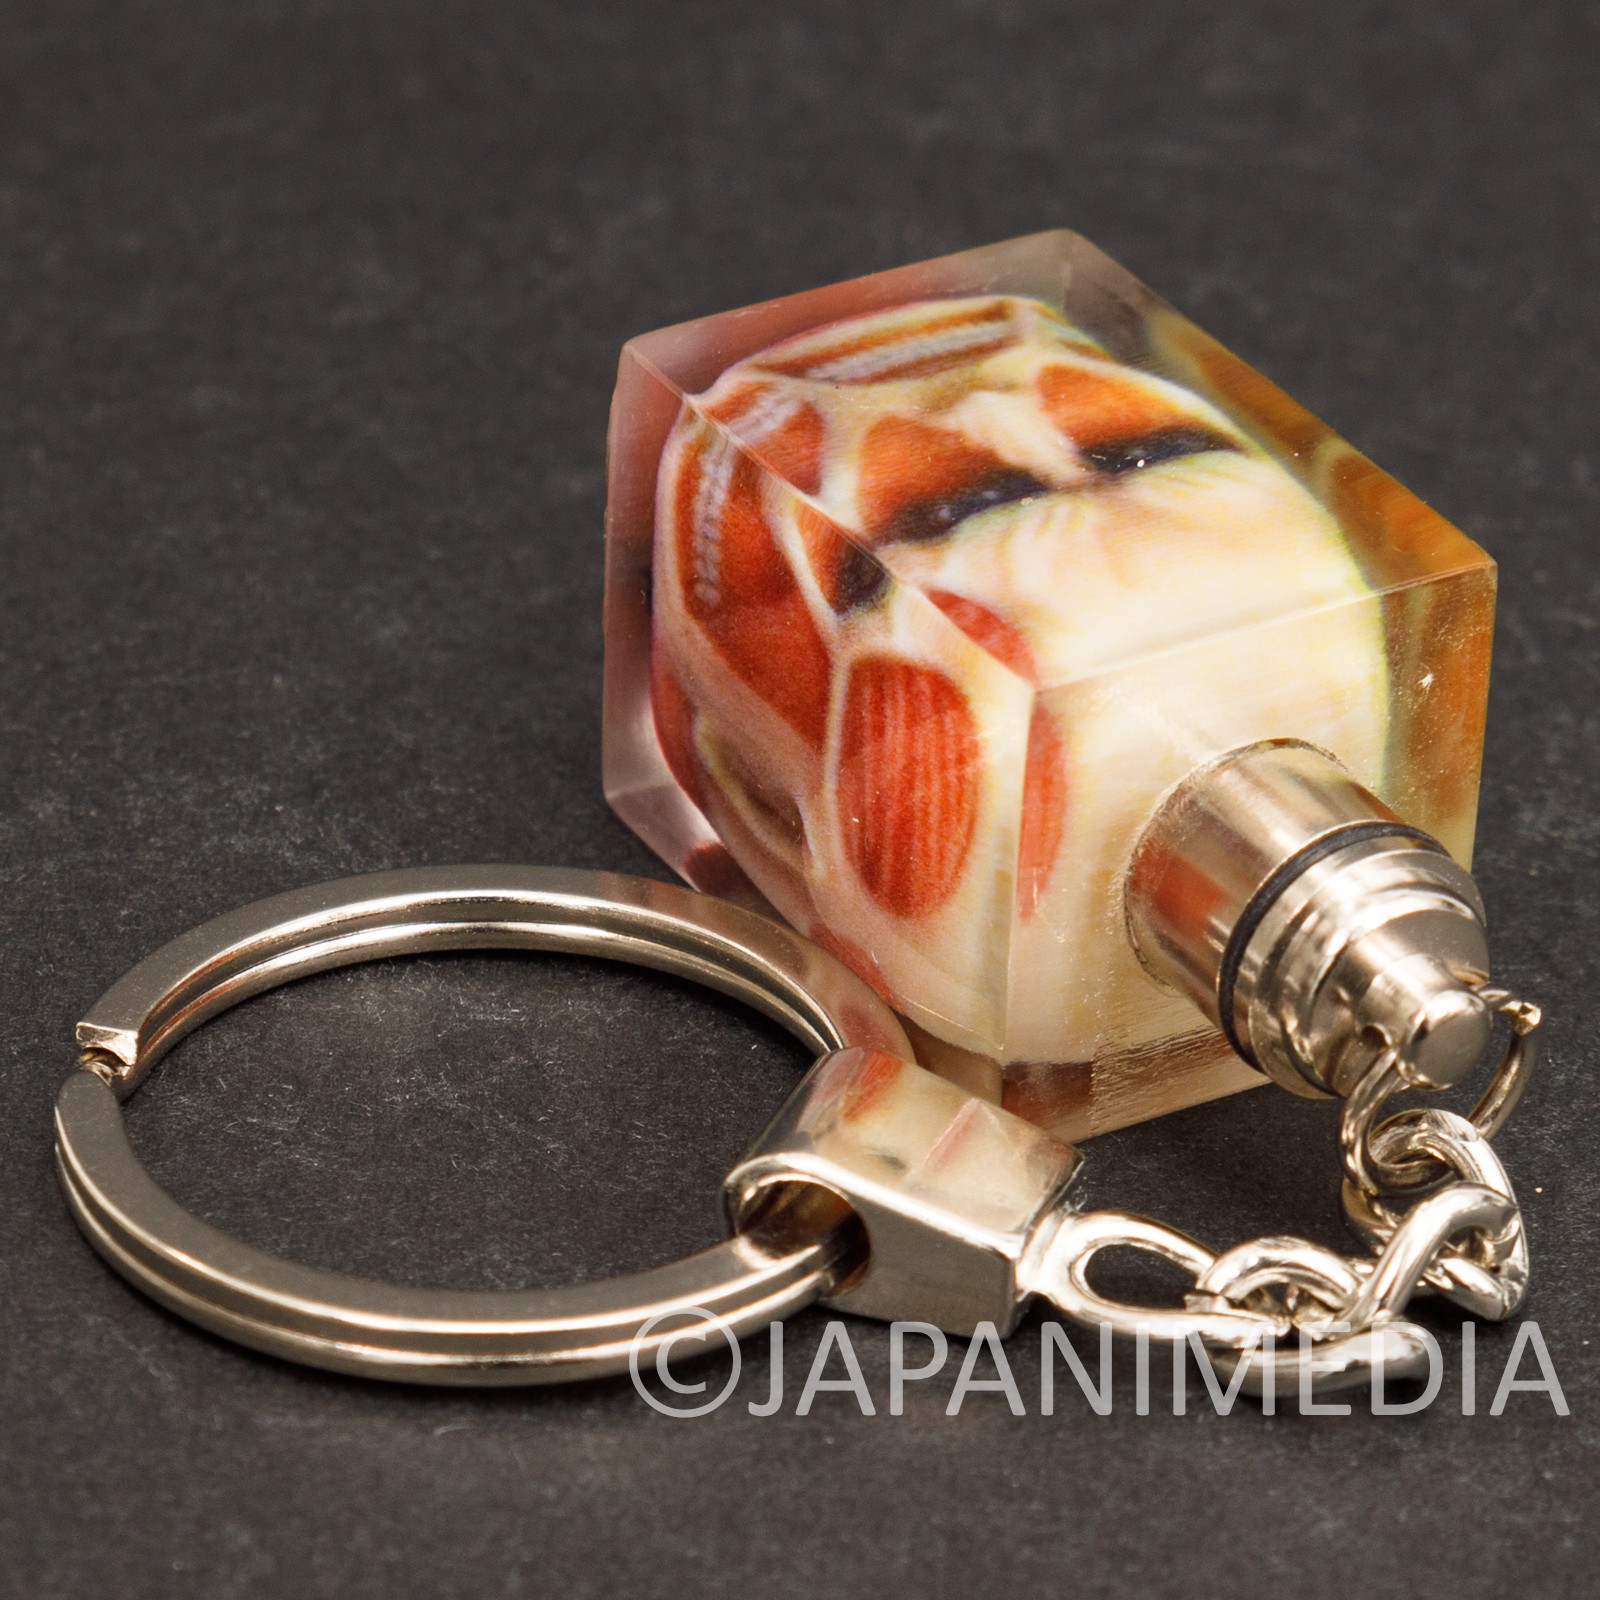 Attack on Titan Colossal Titan Mini Figure in Light up Cube Keychain JAPAN